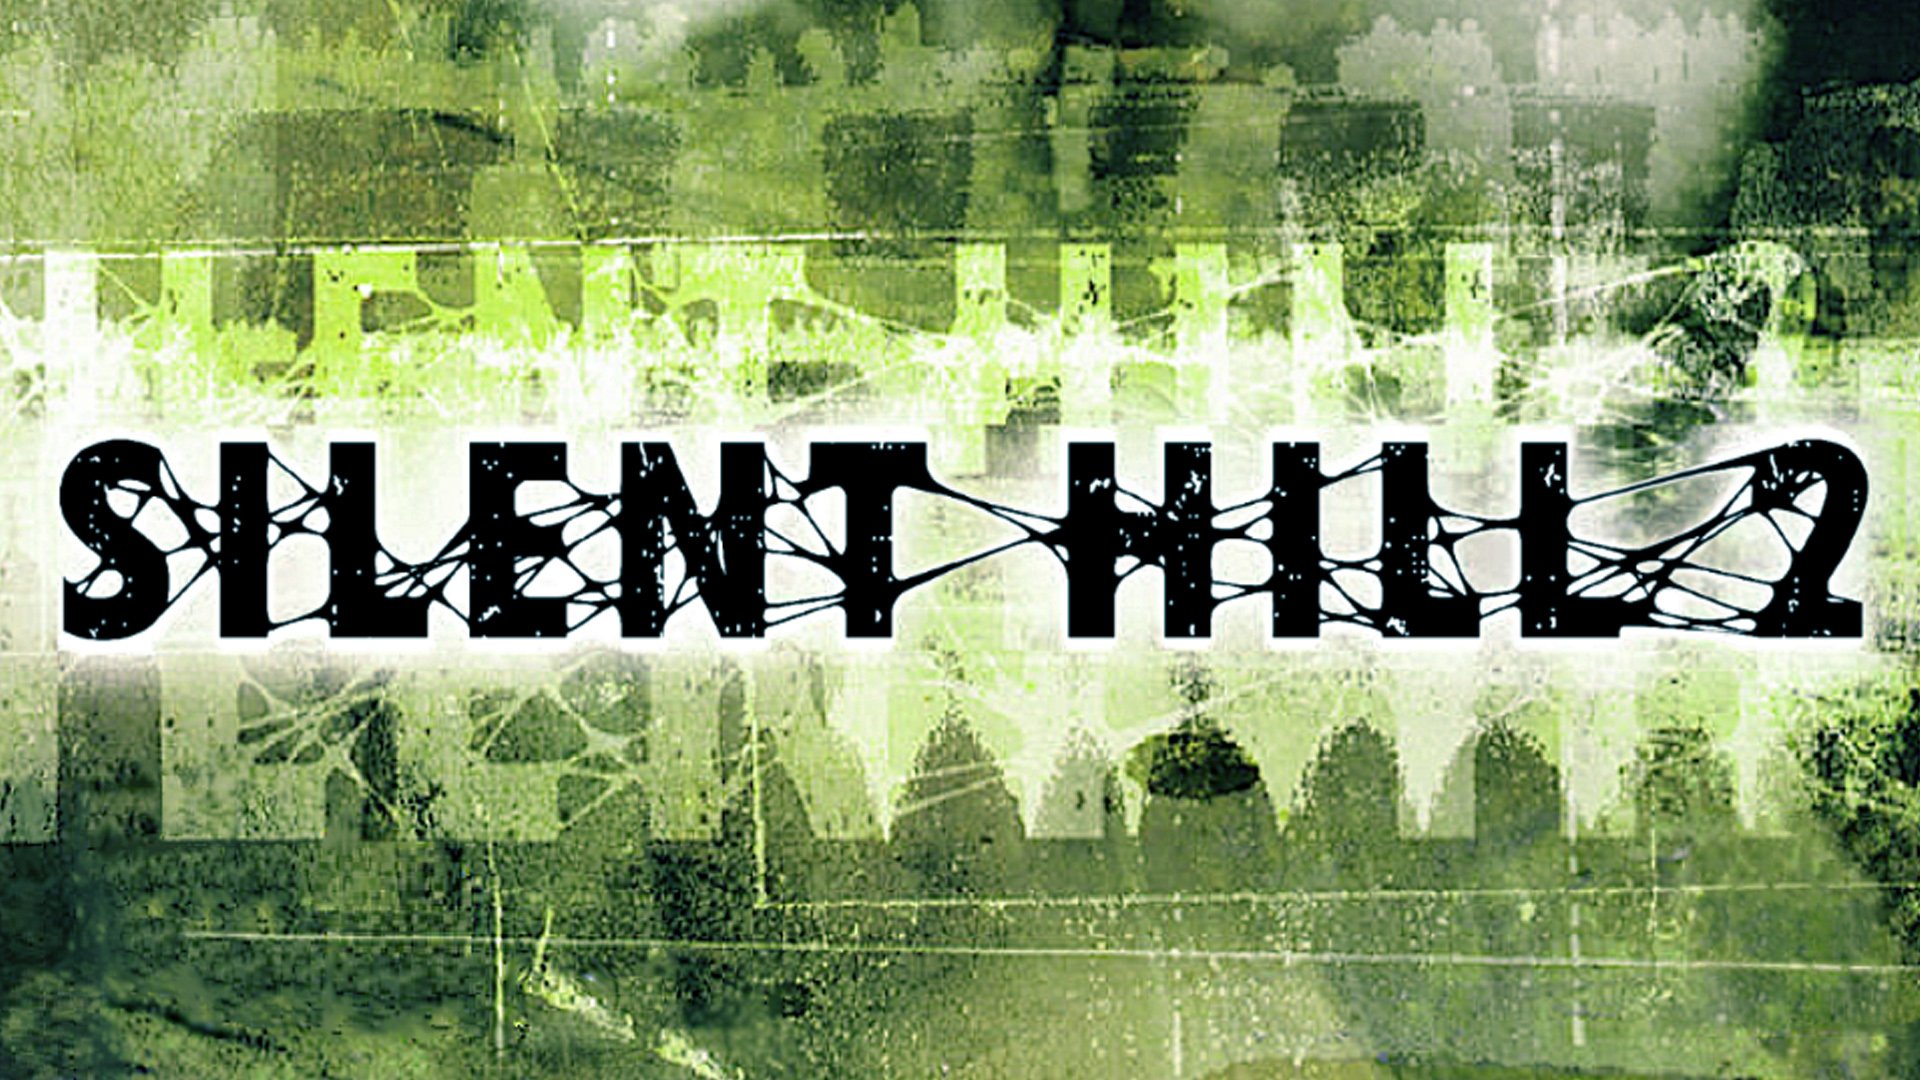 Silent Hill 2 Remake - Trailer 